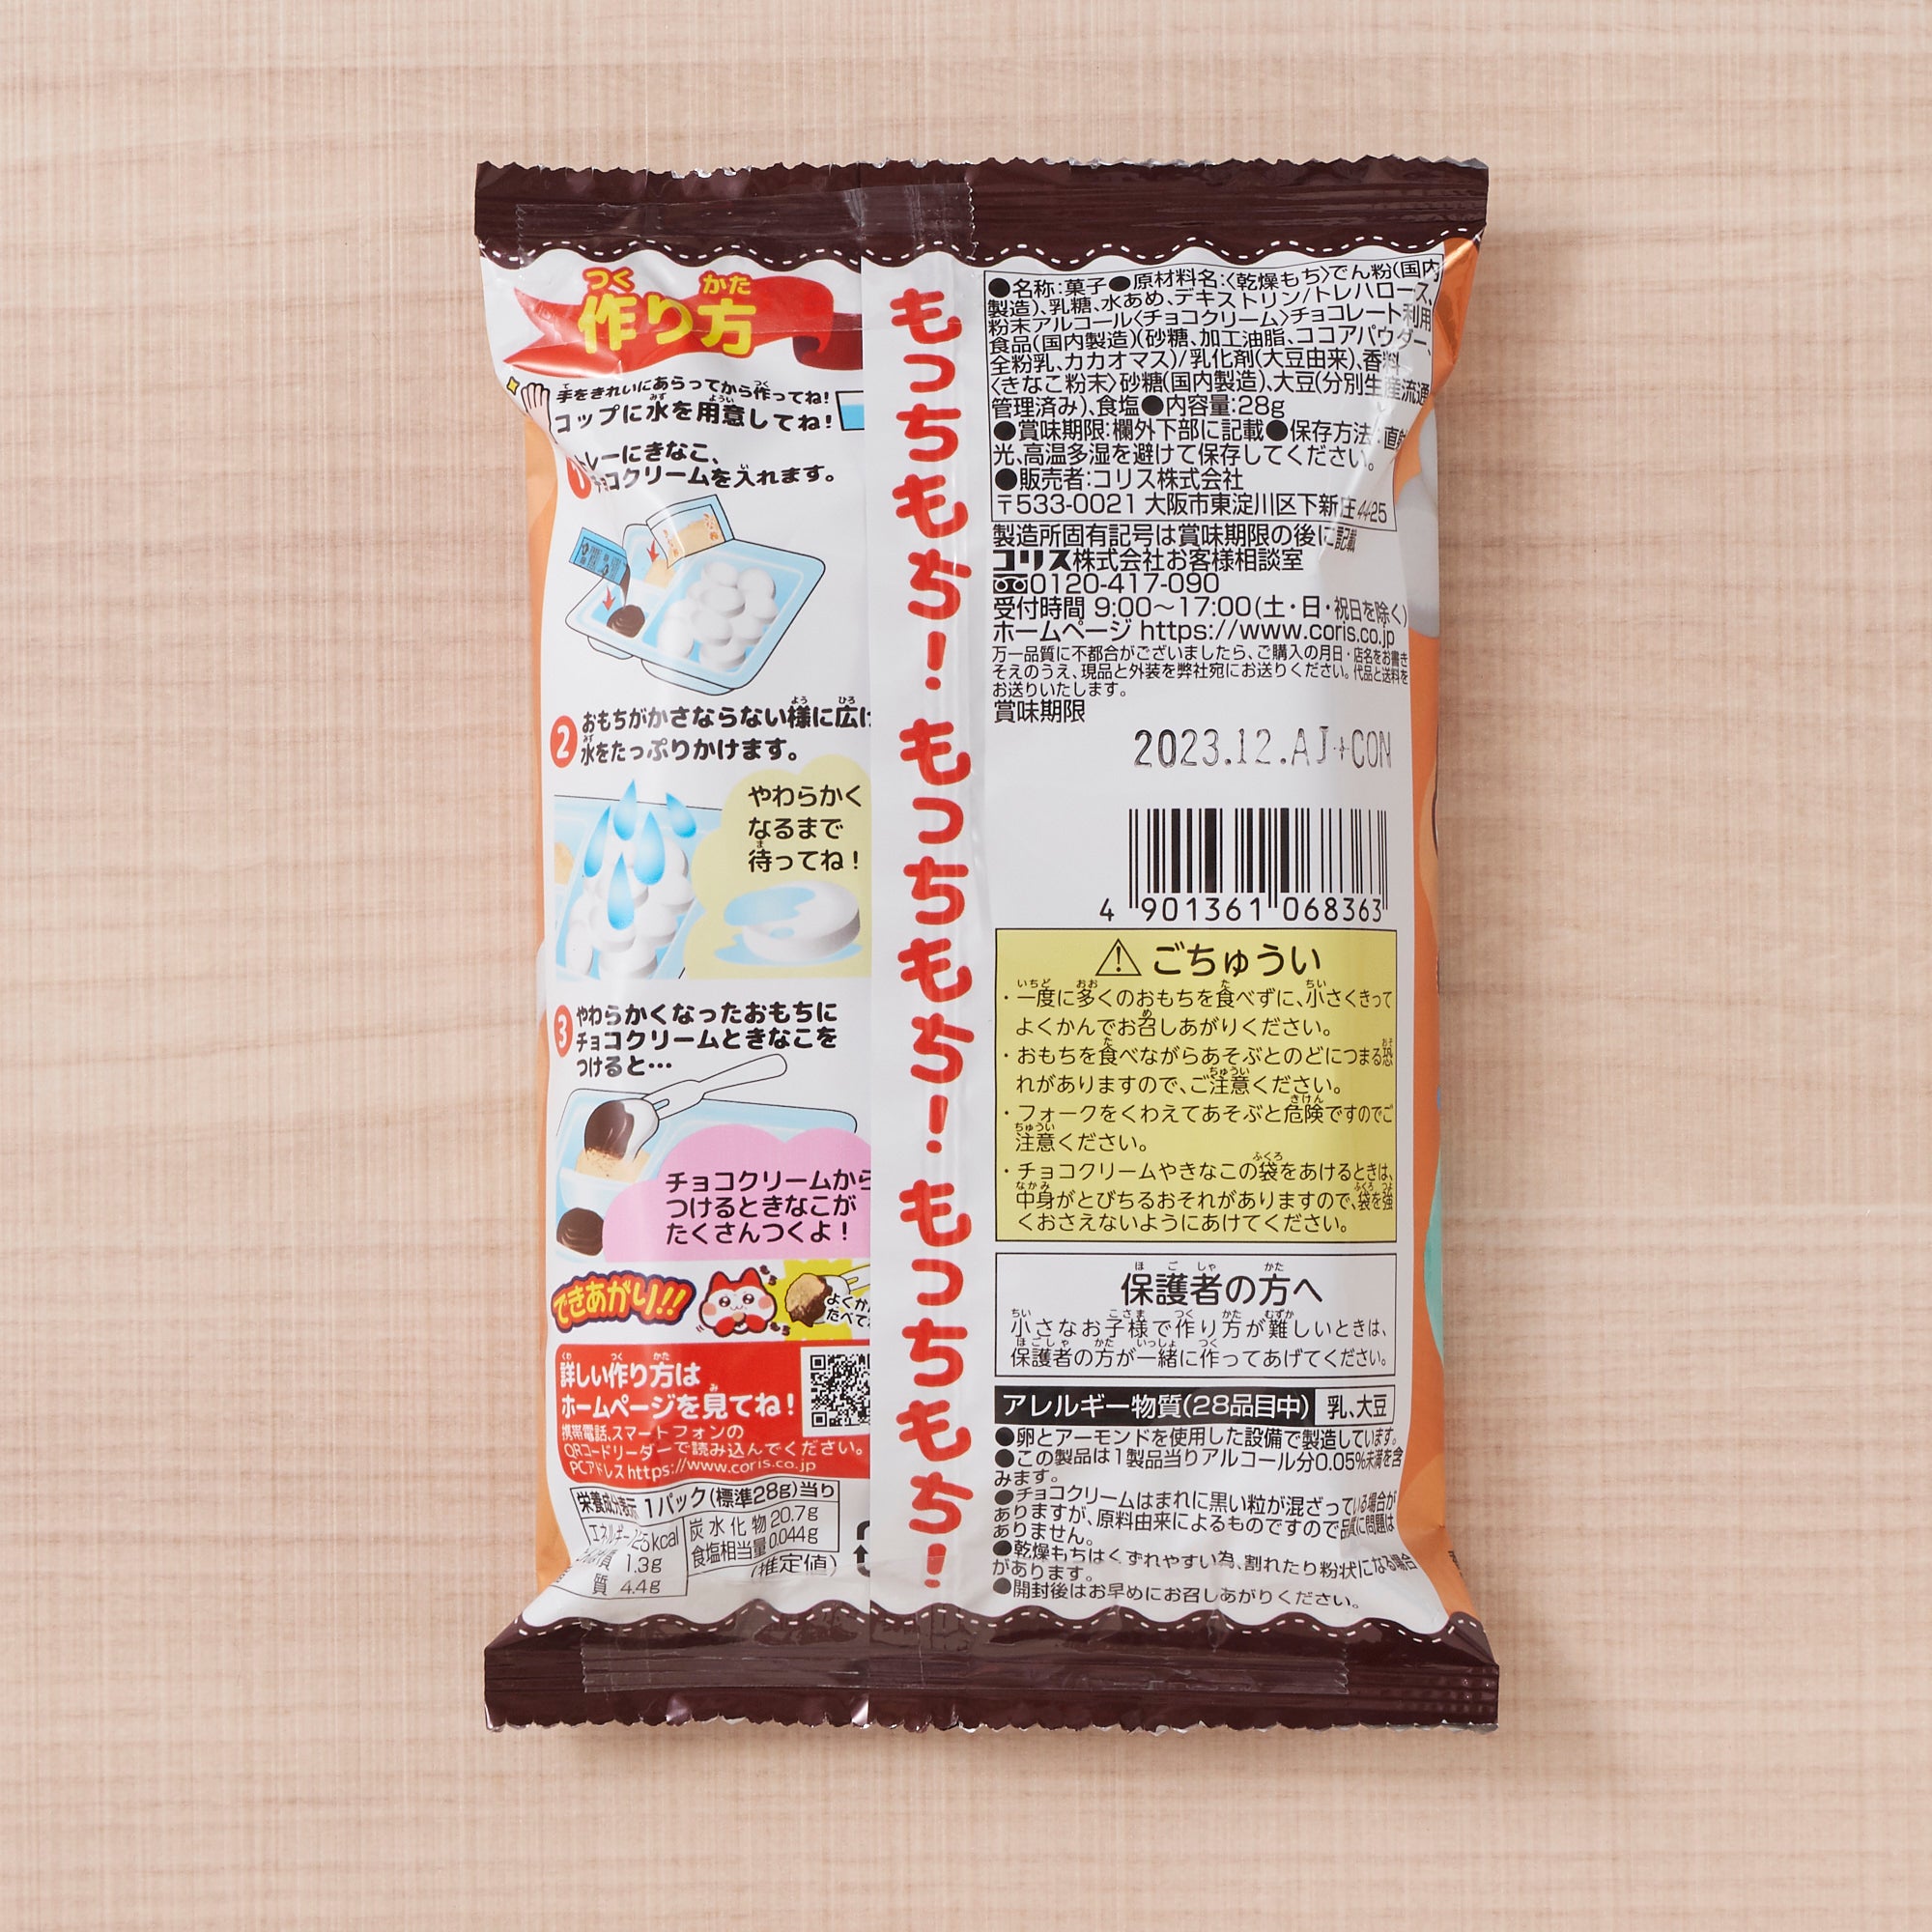 DIY Mochi Kit: Chocolate & Kinako